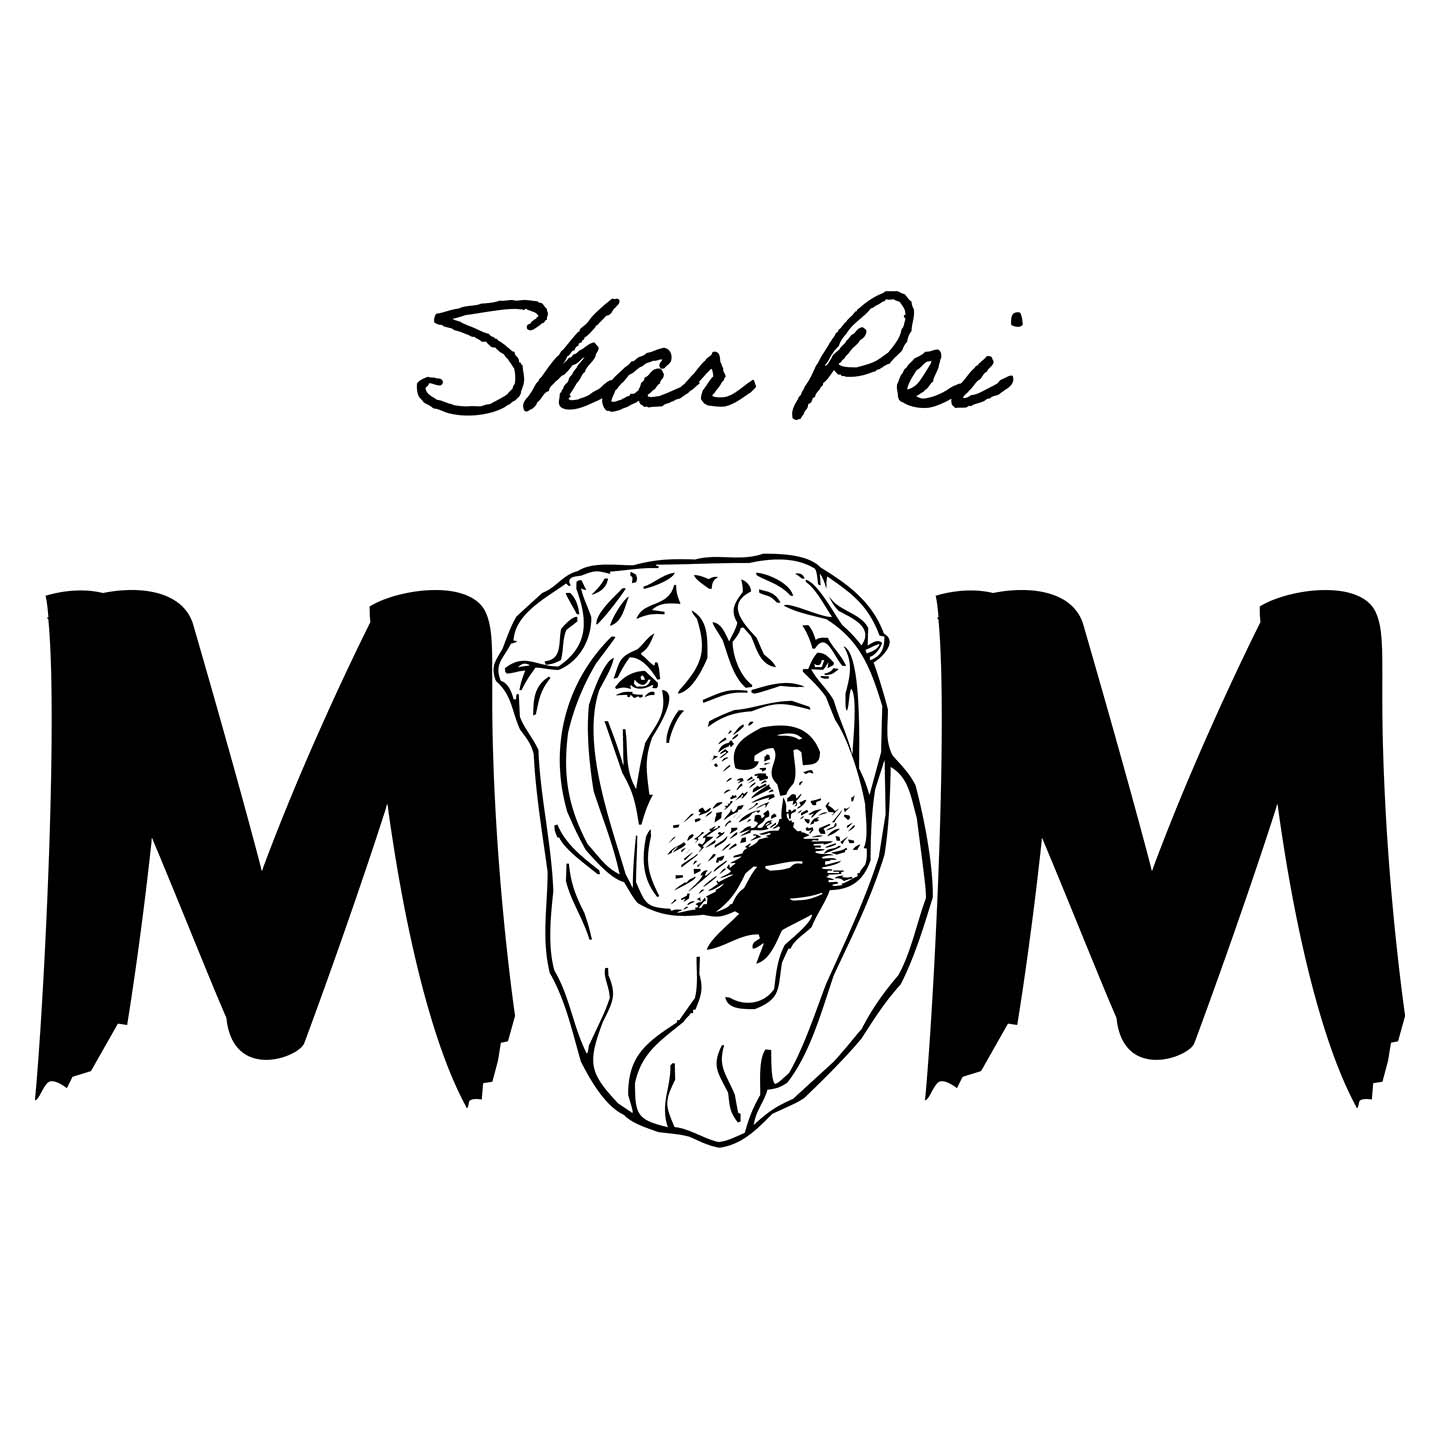 Shar Pei Breed Mom - Women's V-Neck T-Shirt